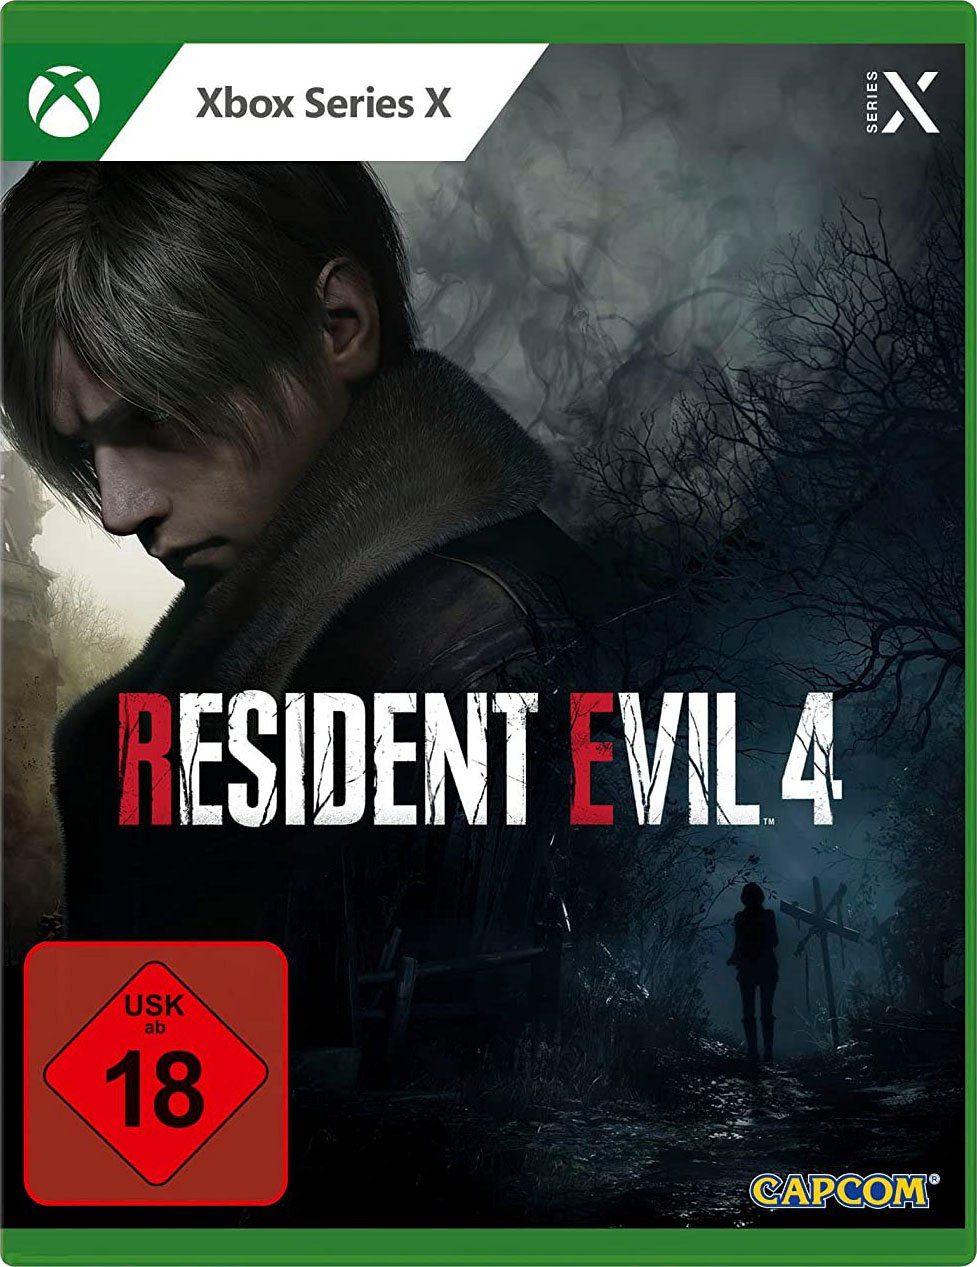 Remake Series Capcom Evil Xbox X Resident 4